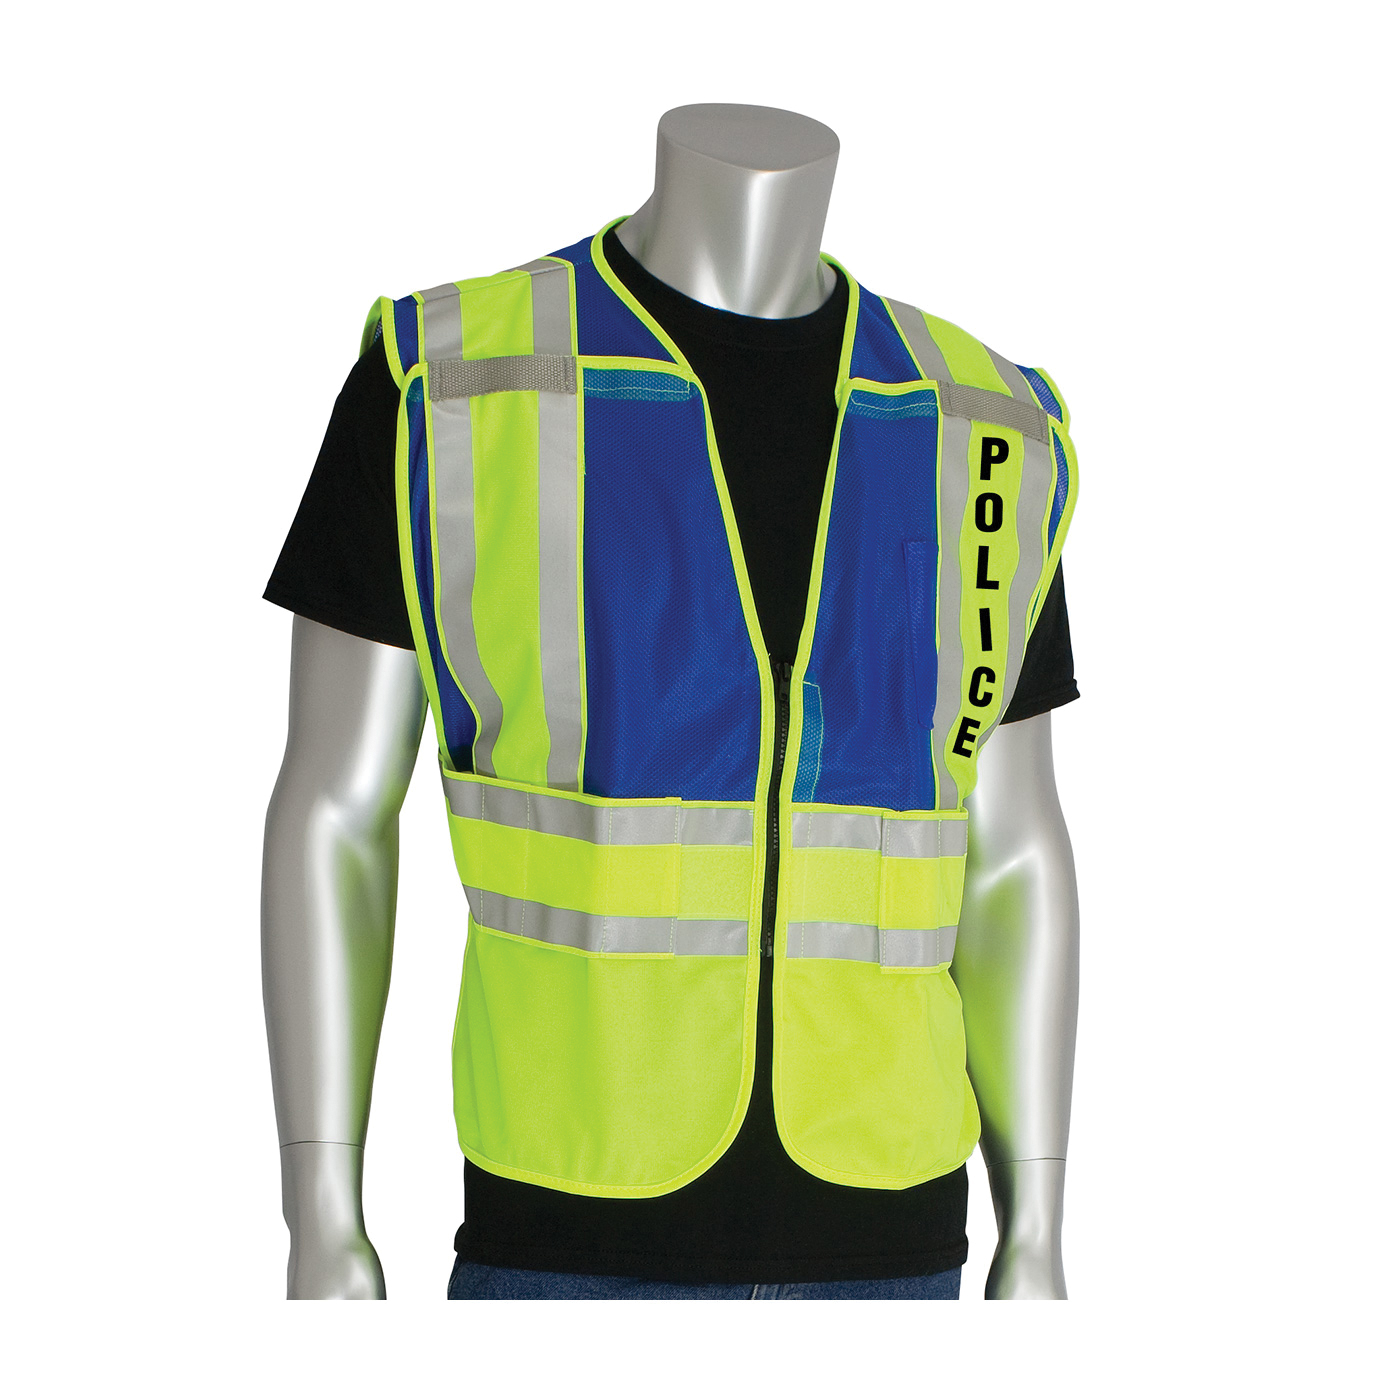 PIP® 302-PSV-BLU-M/XL Public Safety Vest With POLICE Logo, M/XL, Hi-Viz Lime Yellow/Blue, Polyester, Zipper Closure, 2 Pockets, ANSI Class: Class 2, Specifications Met: ANSI 107 Type P